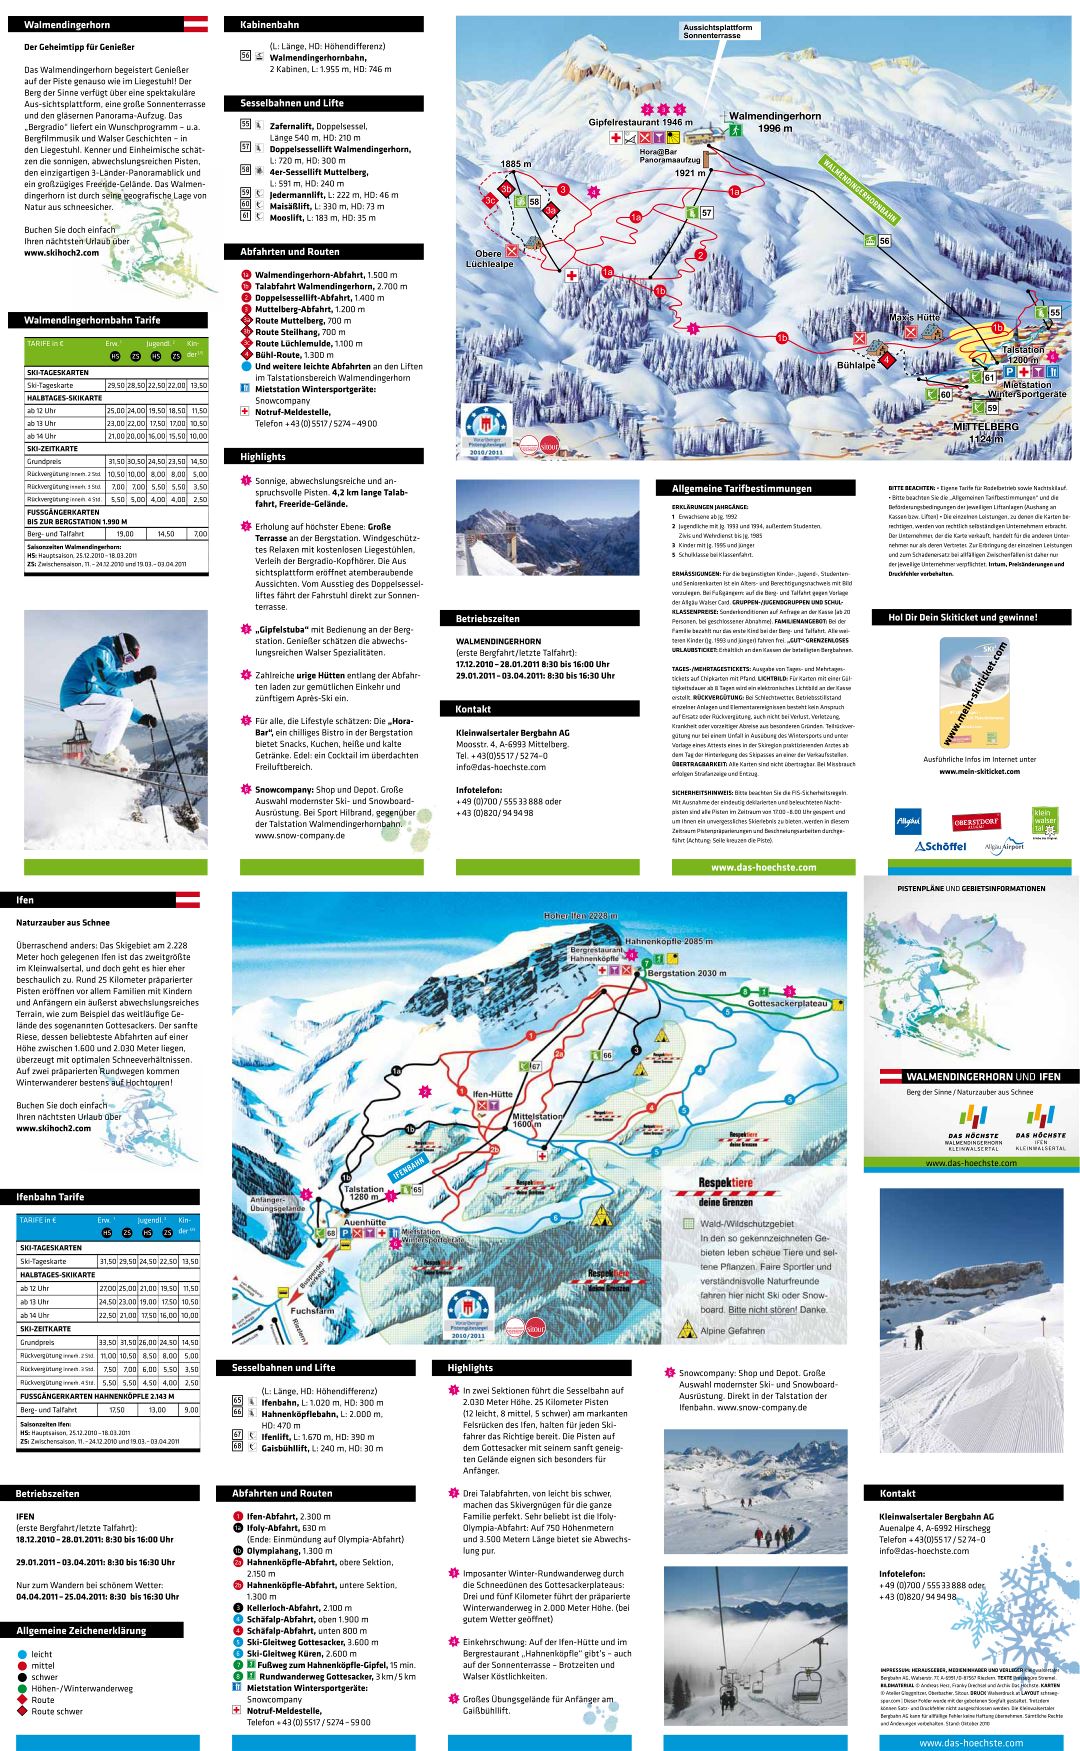 Large scale piste map and guide of Walmendingerhorn, Ifen, Kleinwalsertal - Oberstdorf Ski Resort - 2010